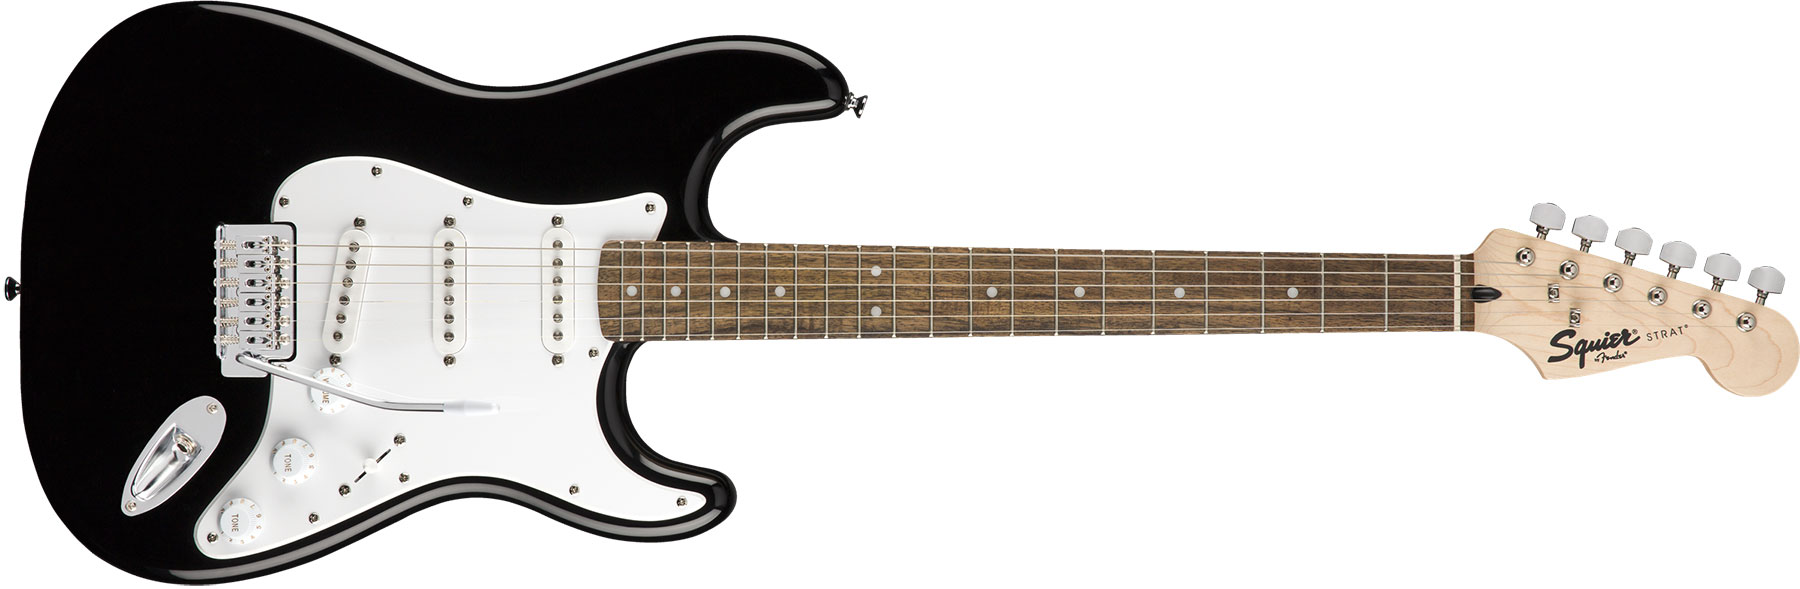 Squier Strat Sss Pack +fender Frontman 10g Trem Lau - Black - Elektrische gitaar set - Variation 1